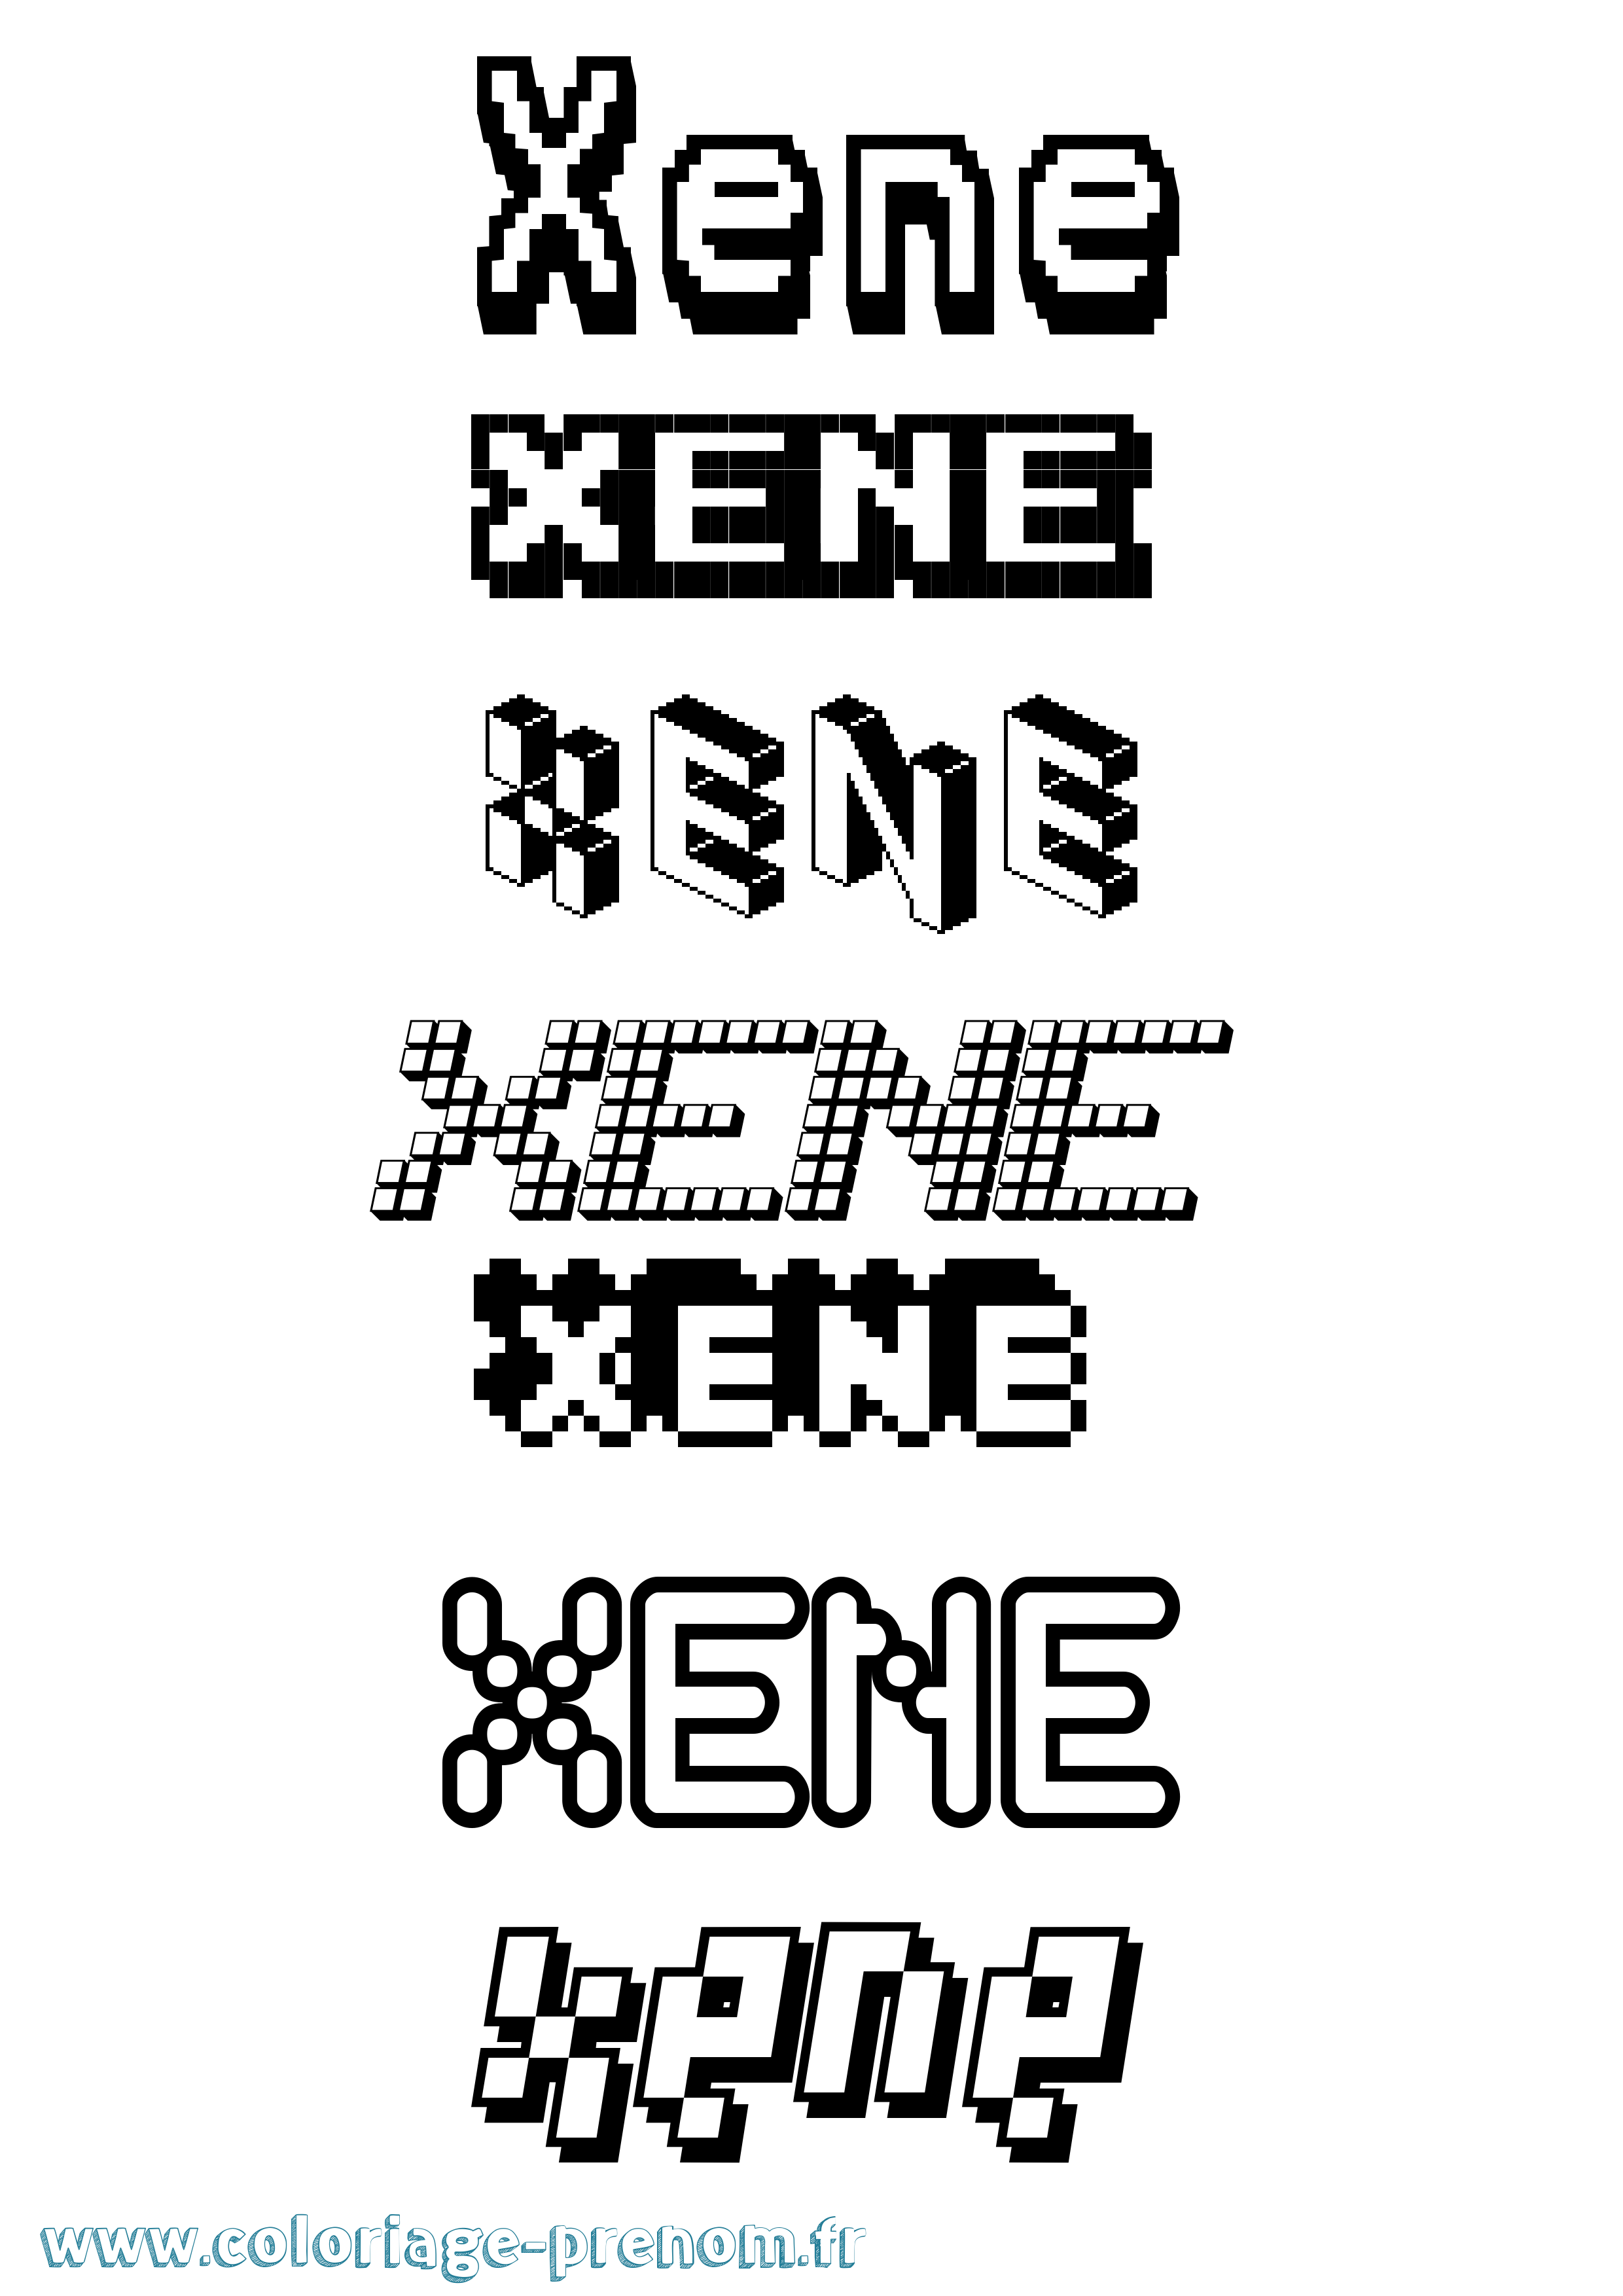 Coloriage prénom Xene Pixel